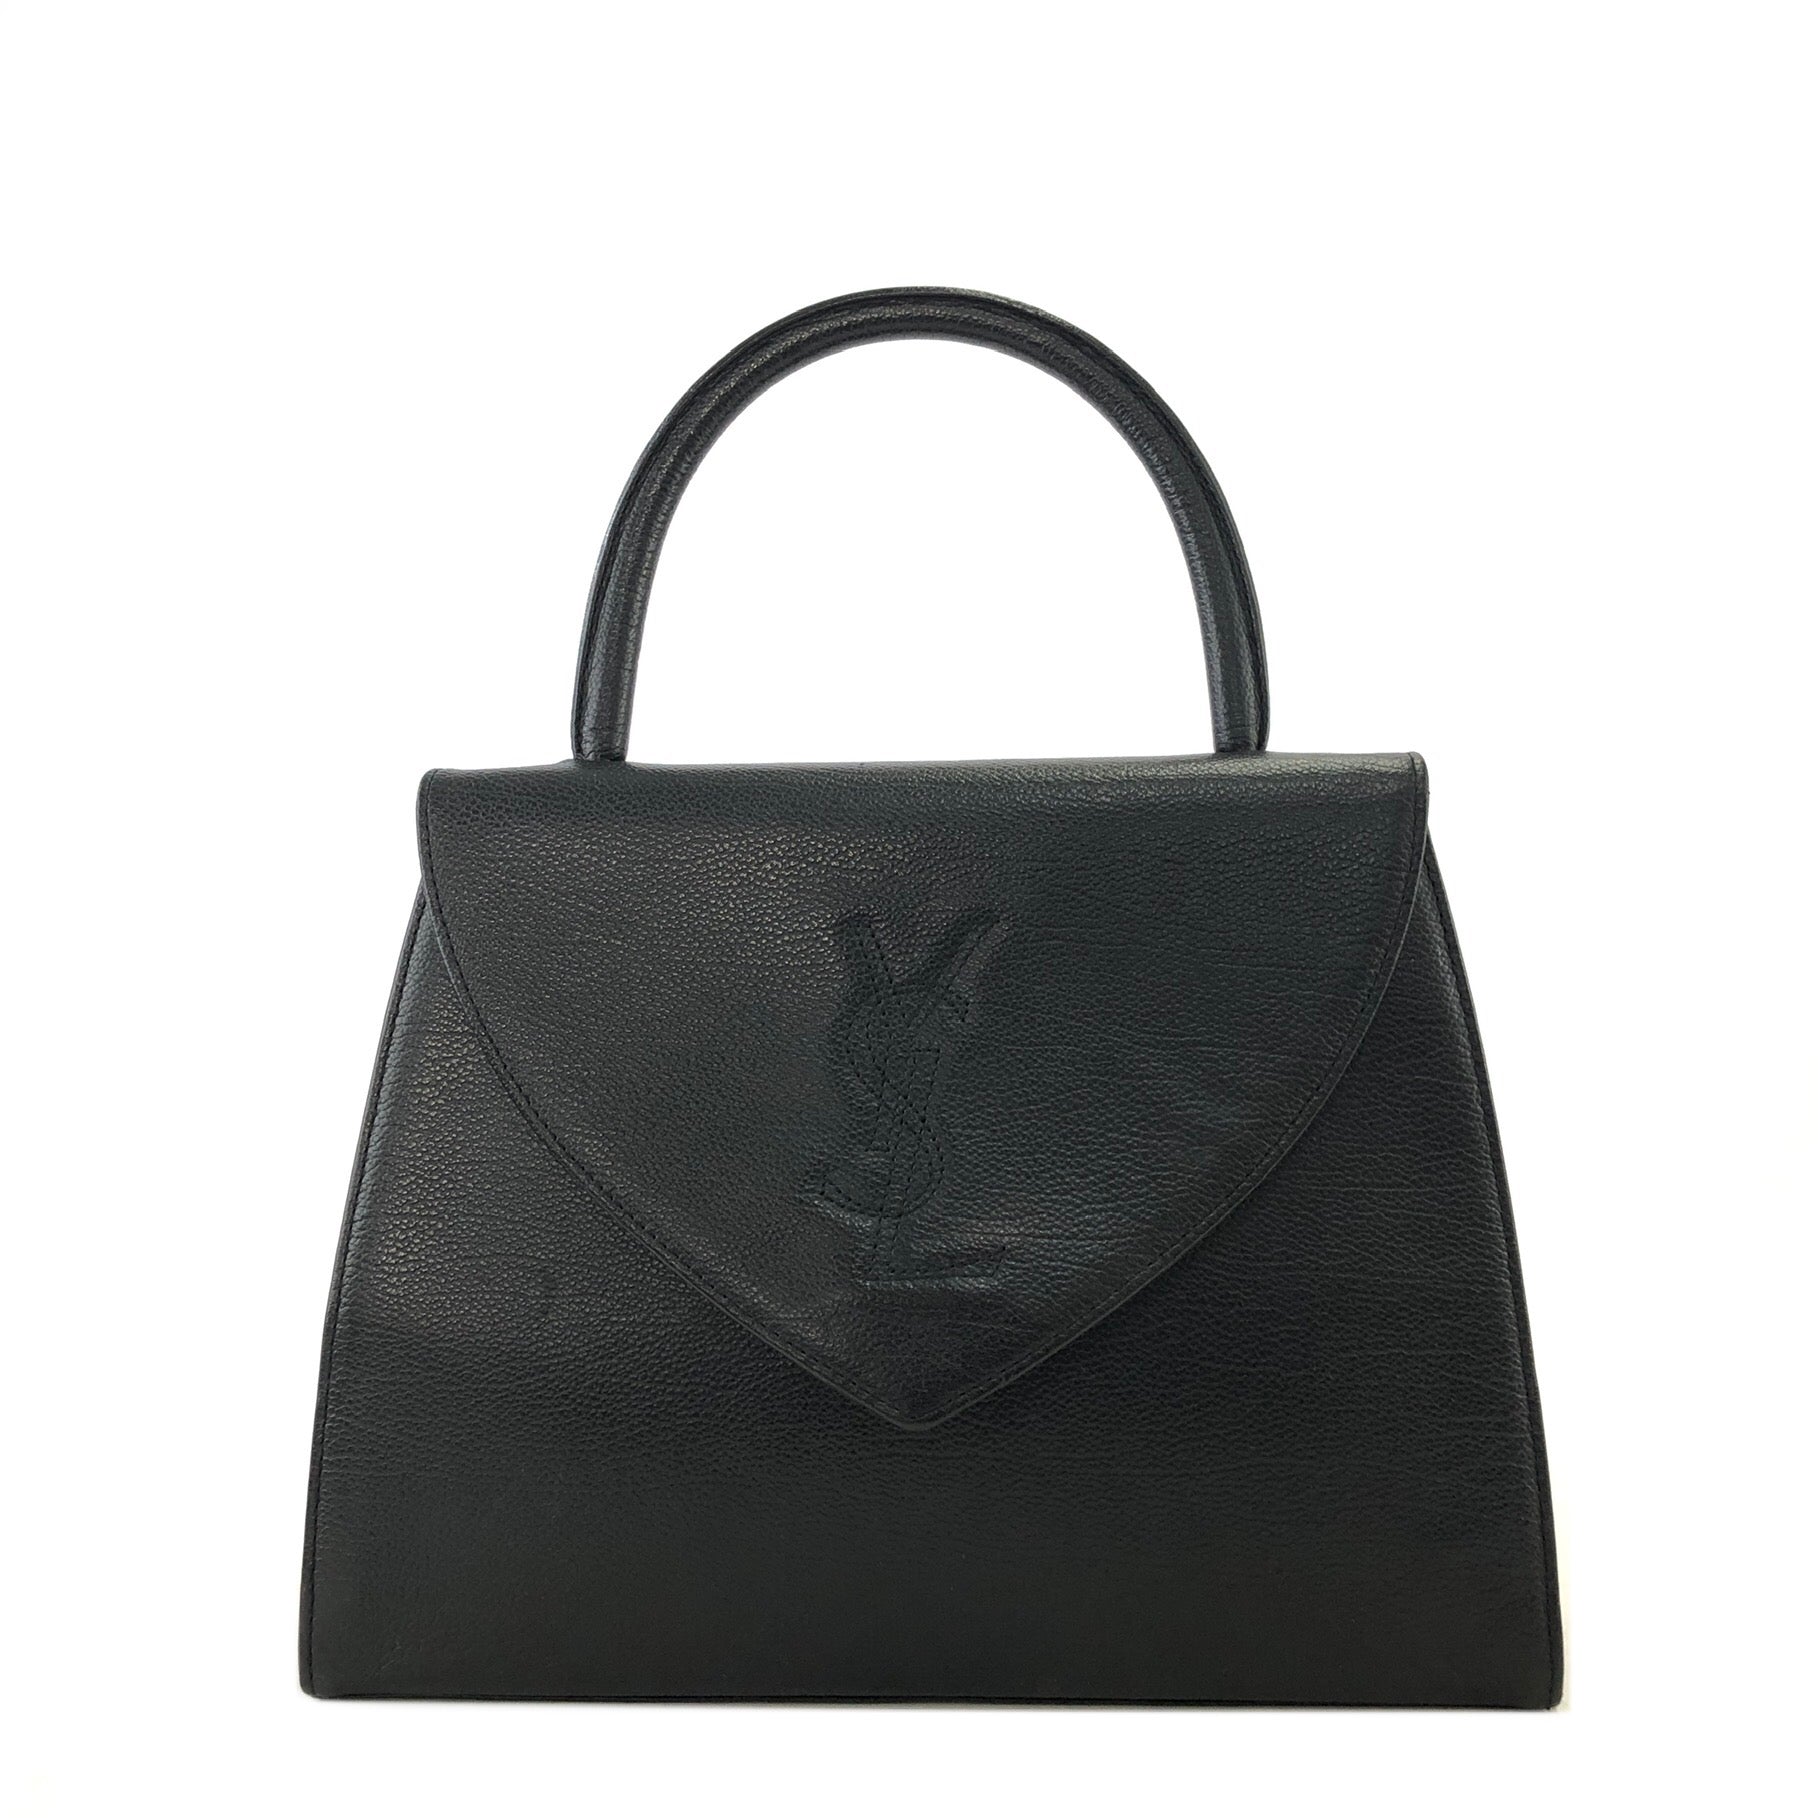 Help me decide - YSL or Gucci? : r/handbags